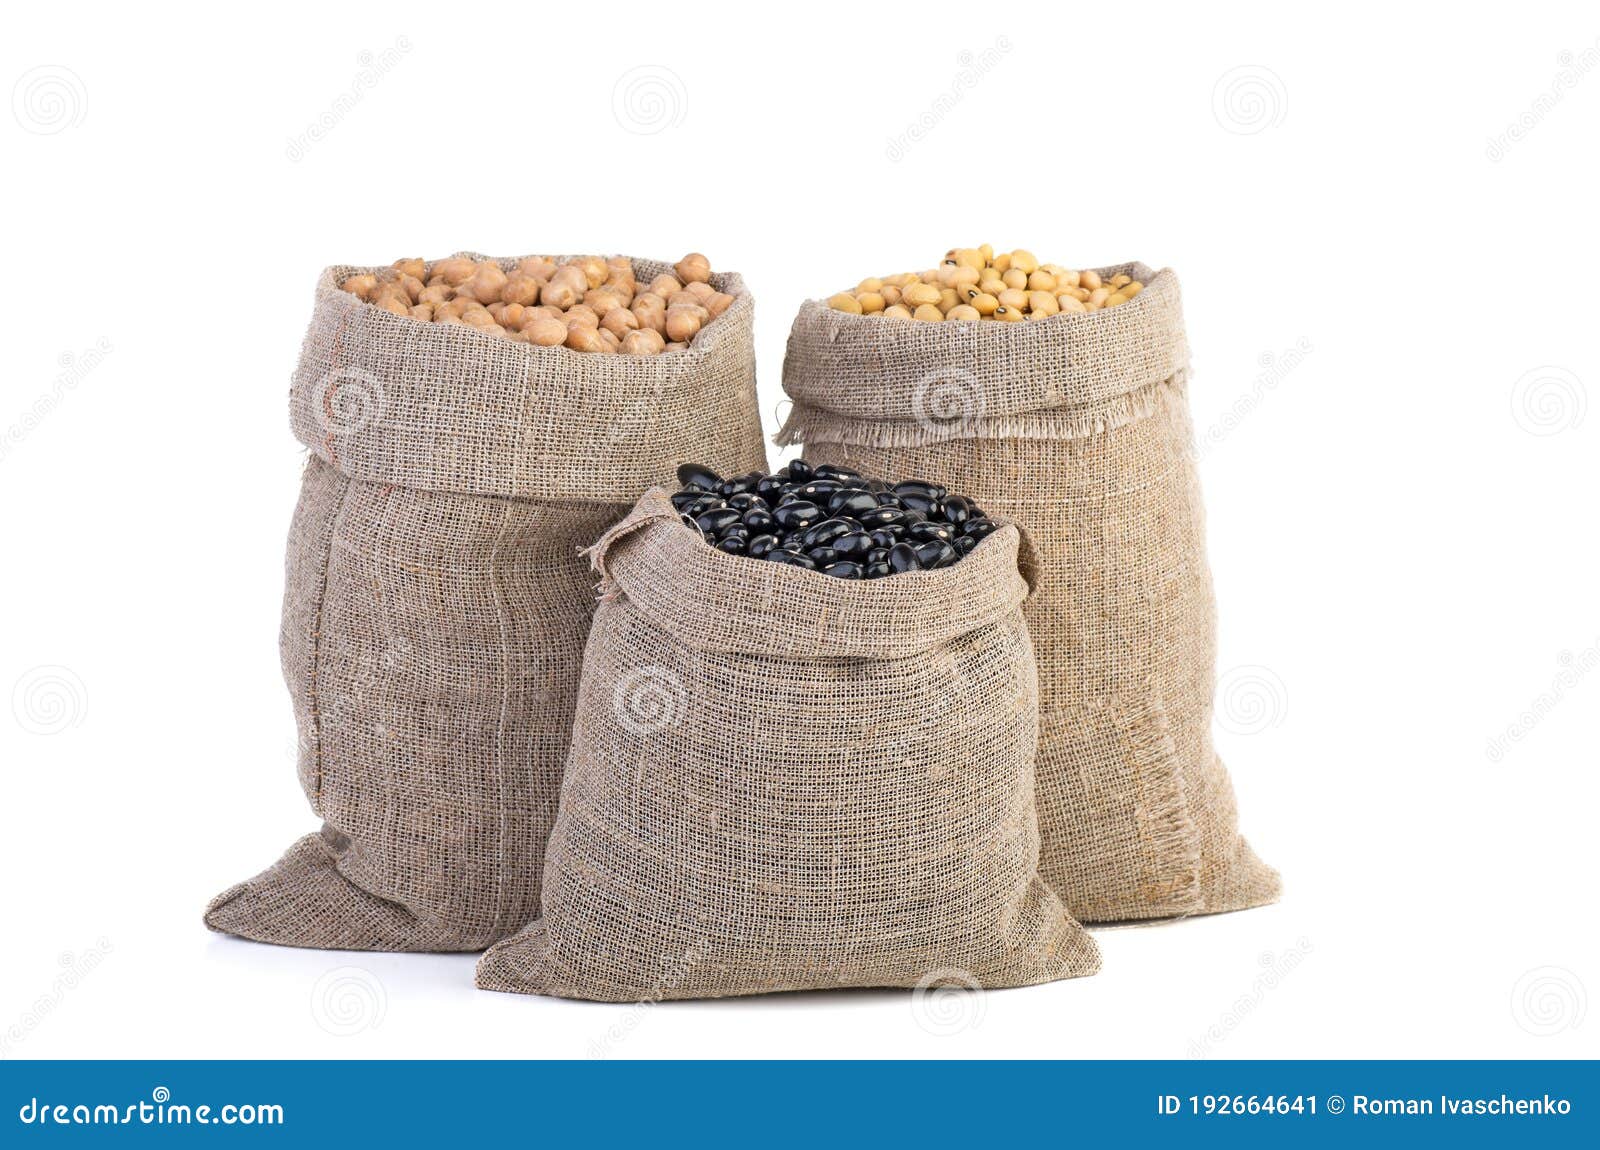 jute sacks with dried peas, soja beans and black legume